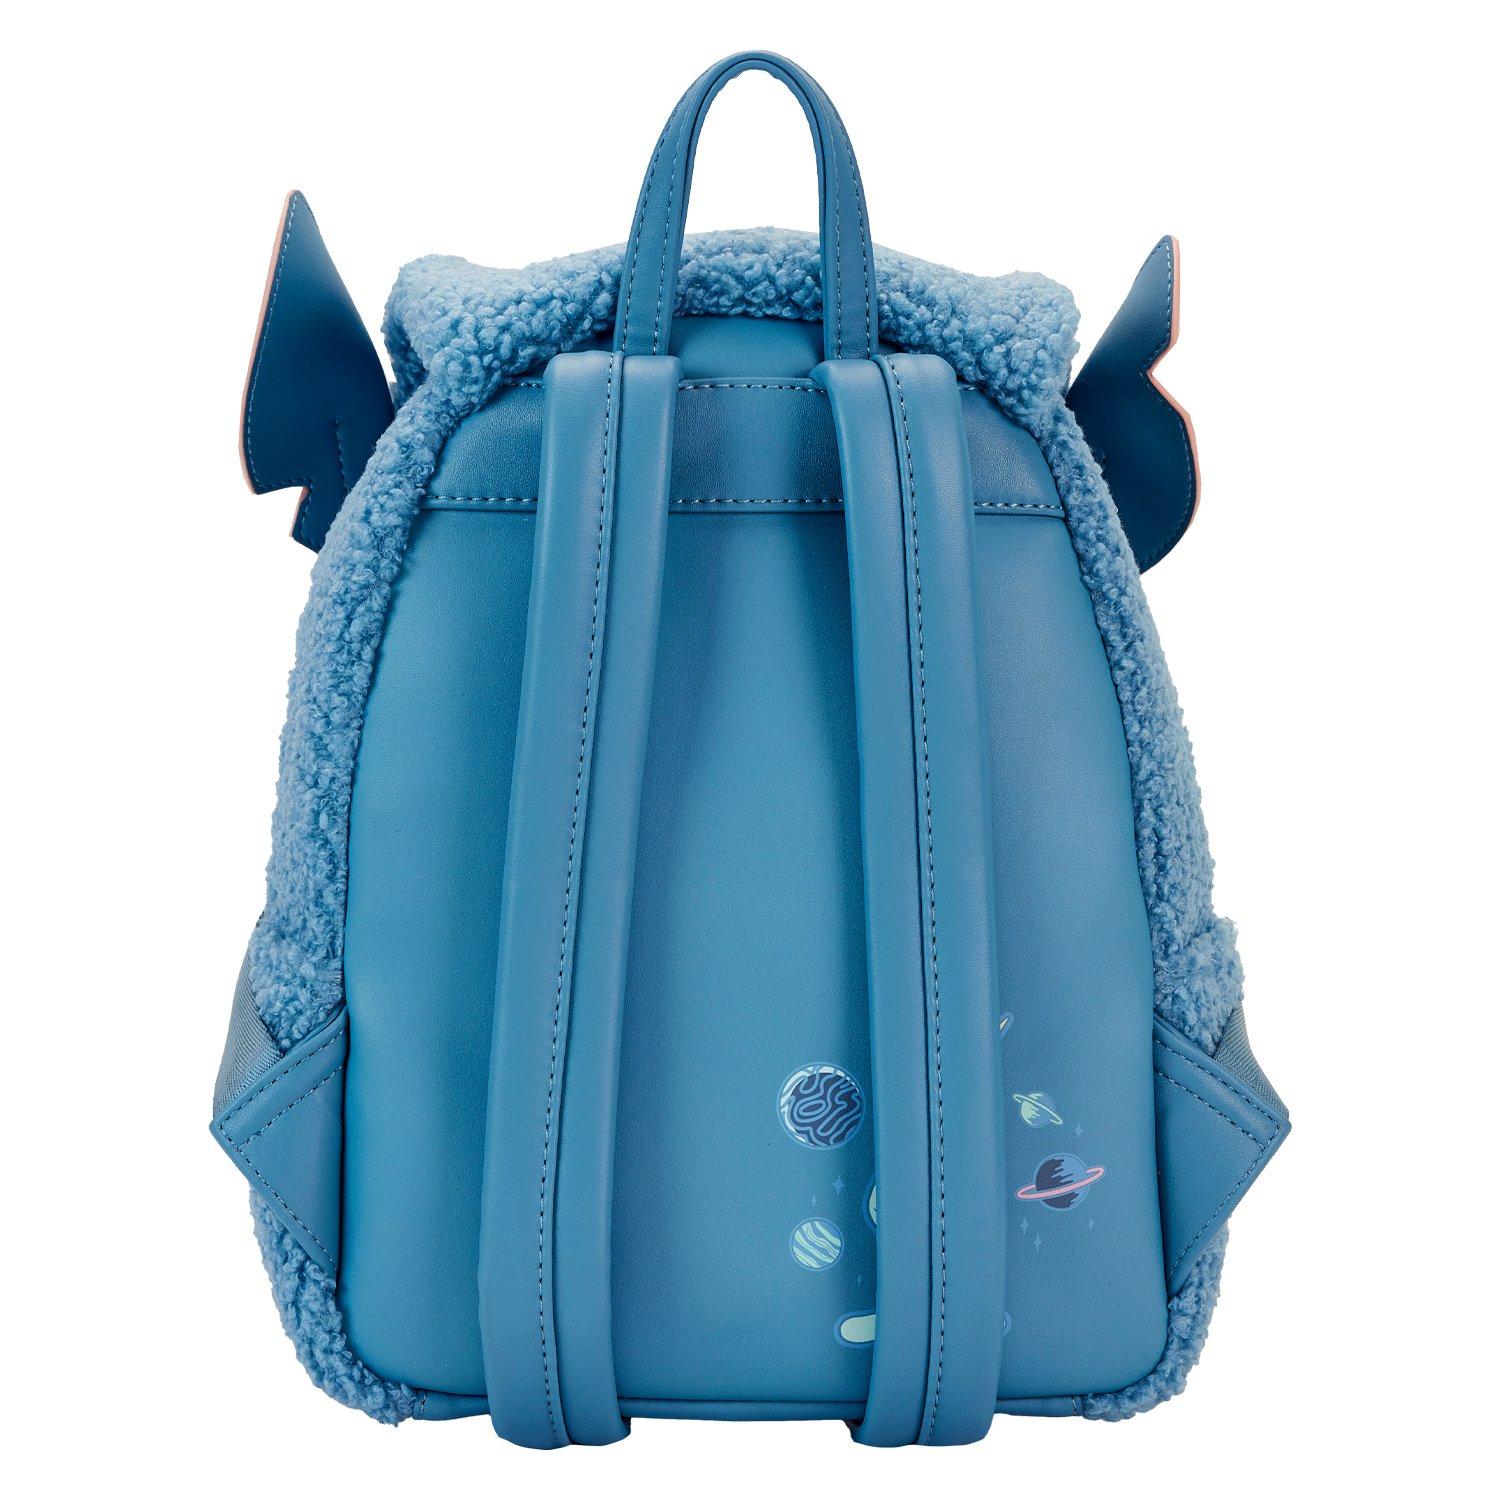 Loungefly Disney Lilo and Stitch - Stitch Plush Pocket Mini Backpack